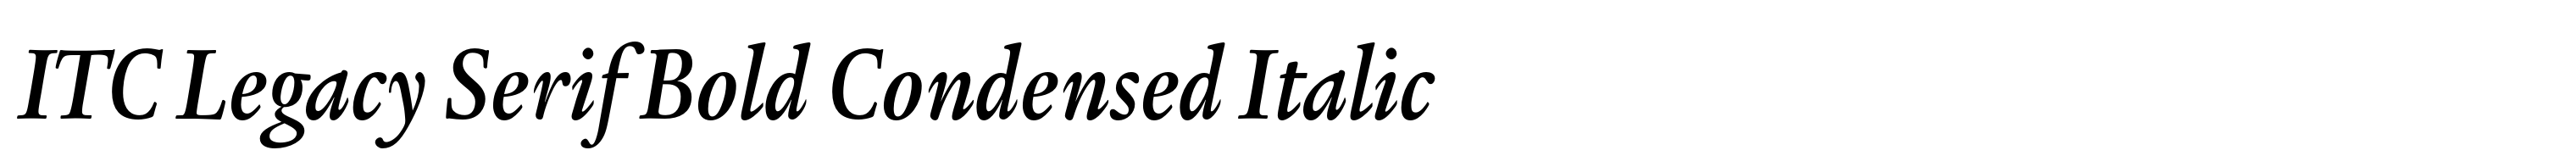 ITC Legacy Serif Bold Condensed Italic